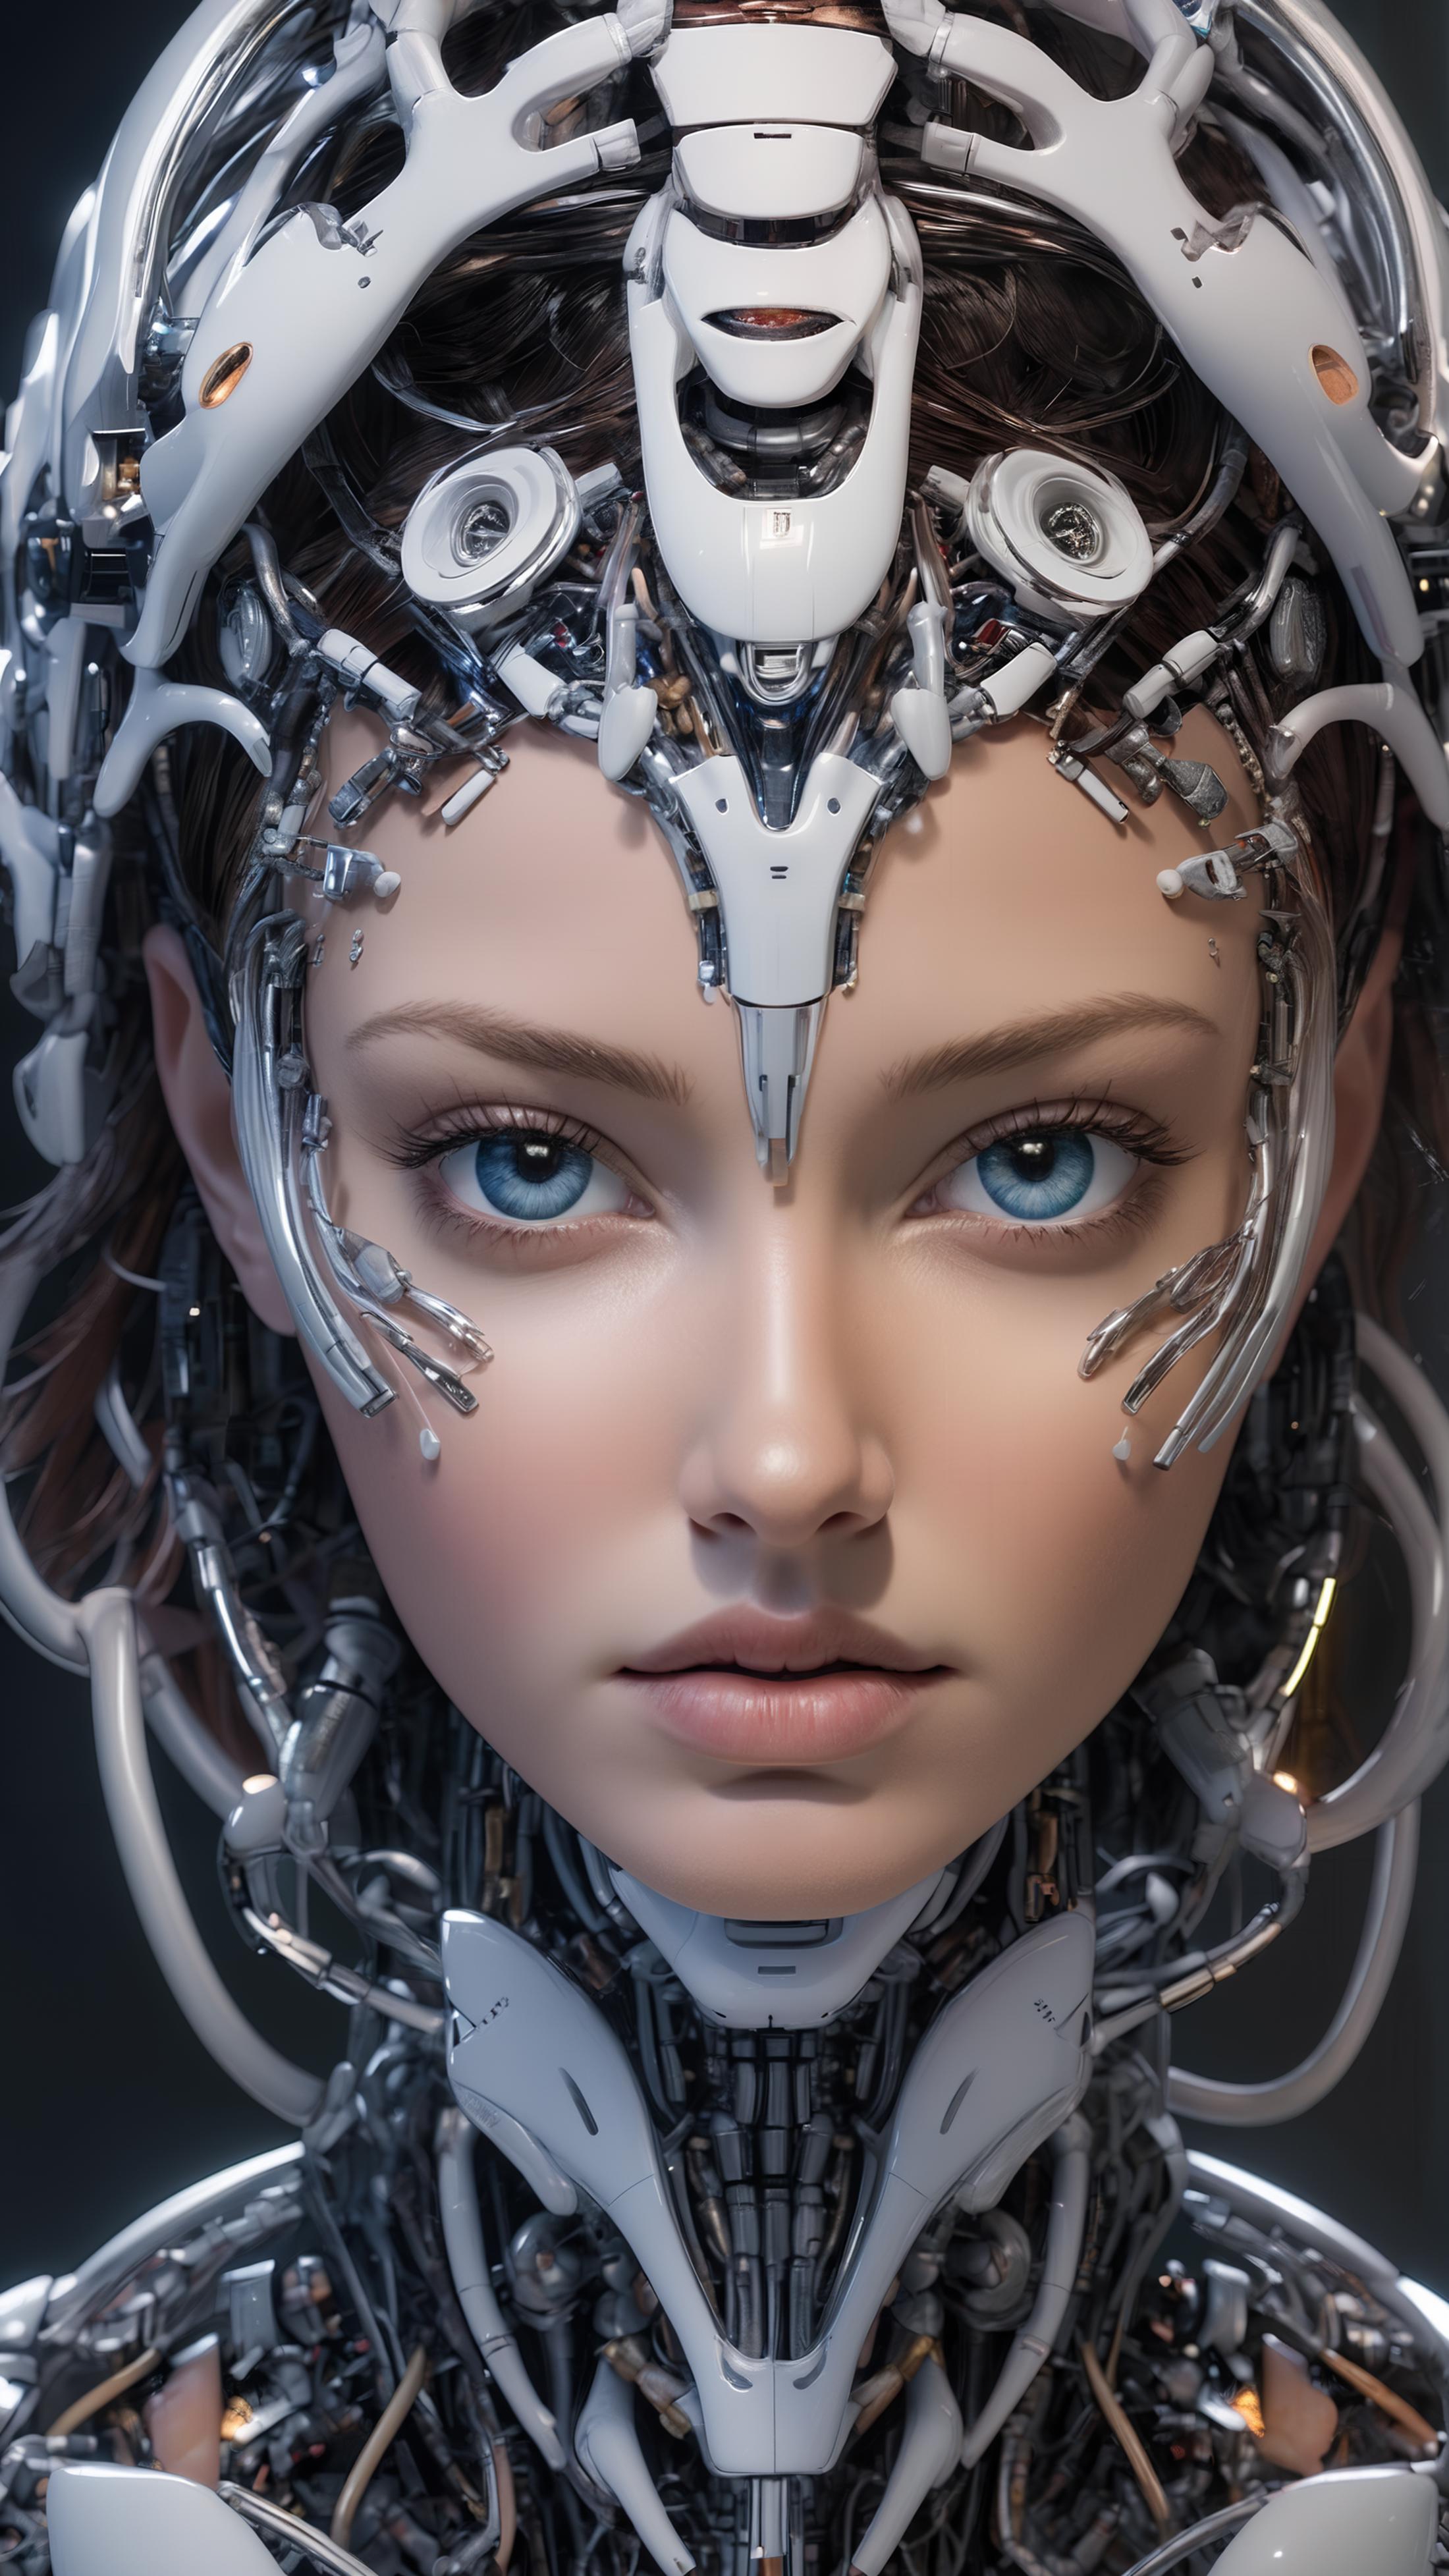 AI model image by charsheetanon